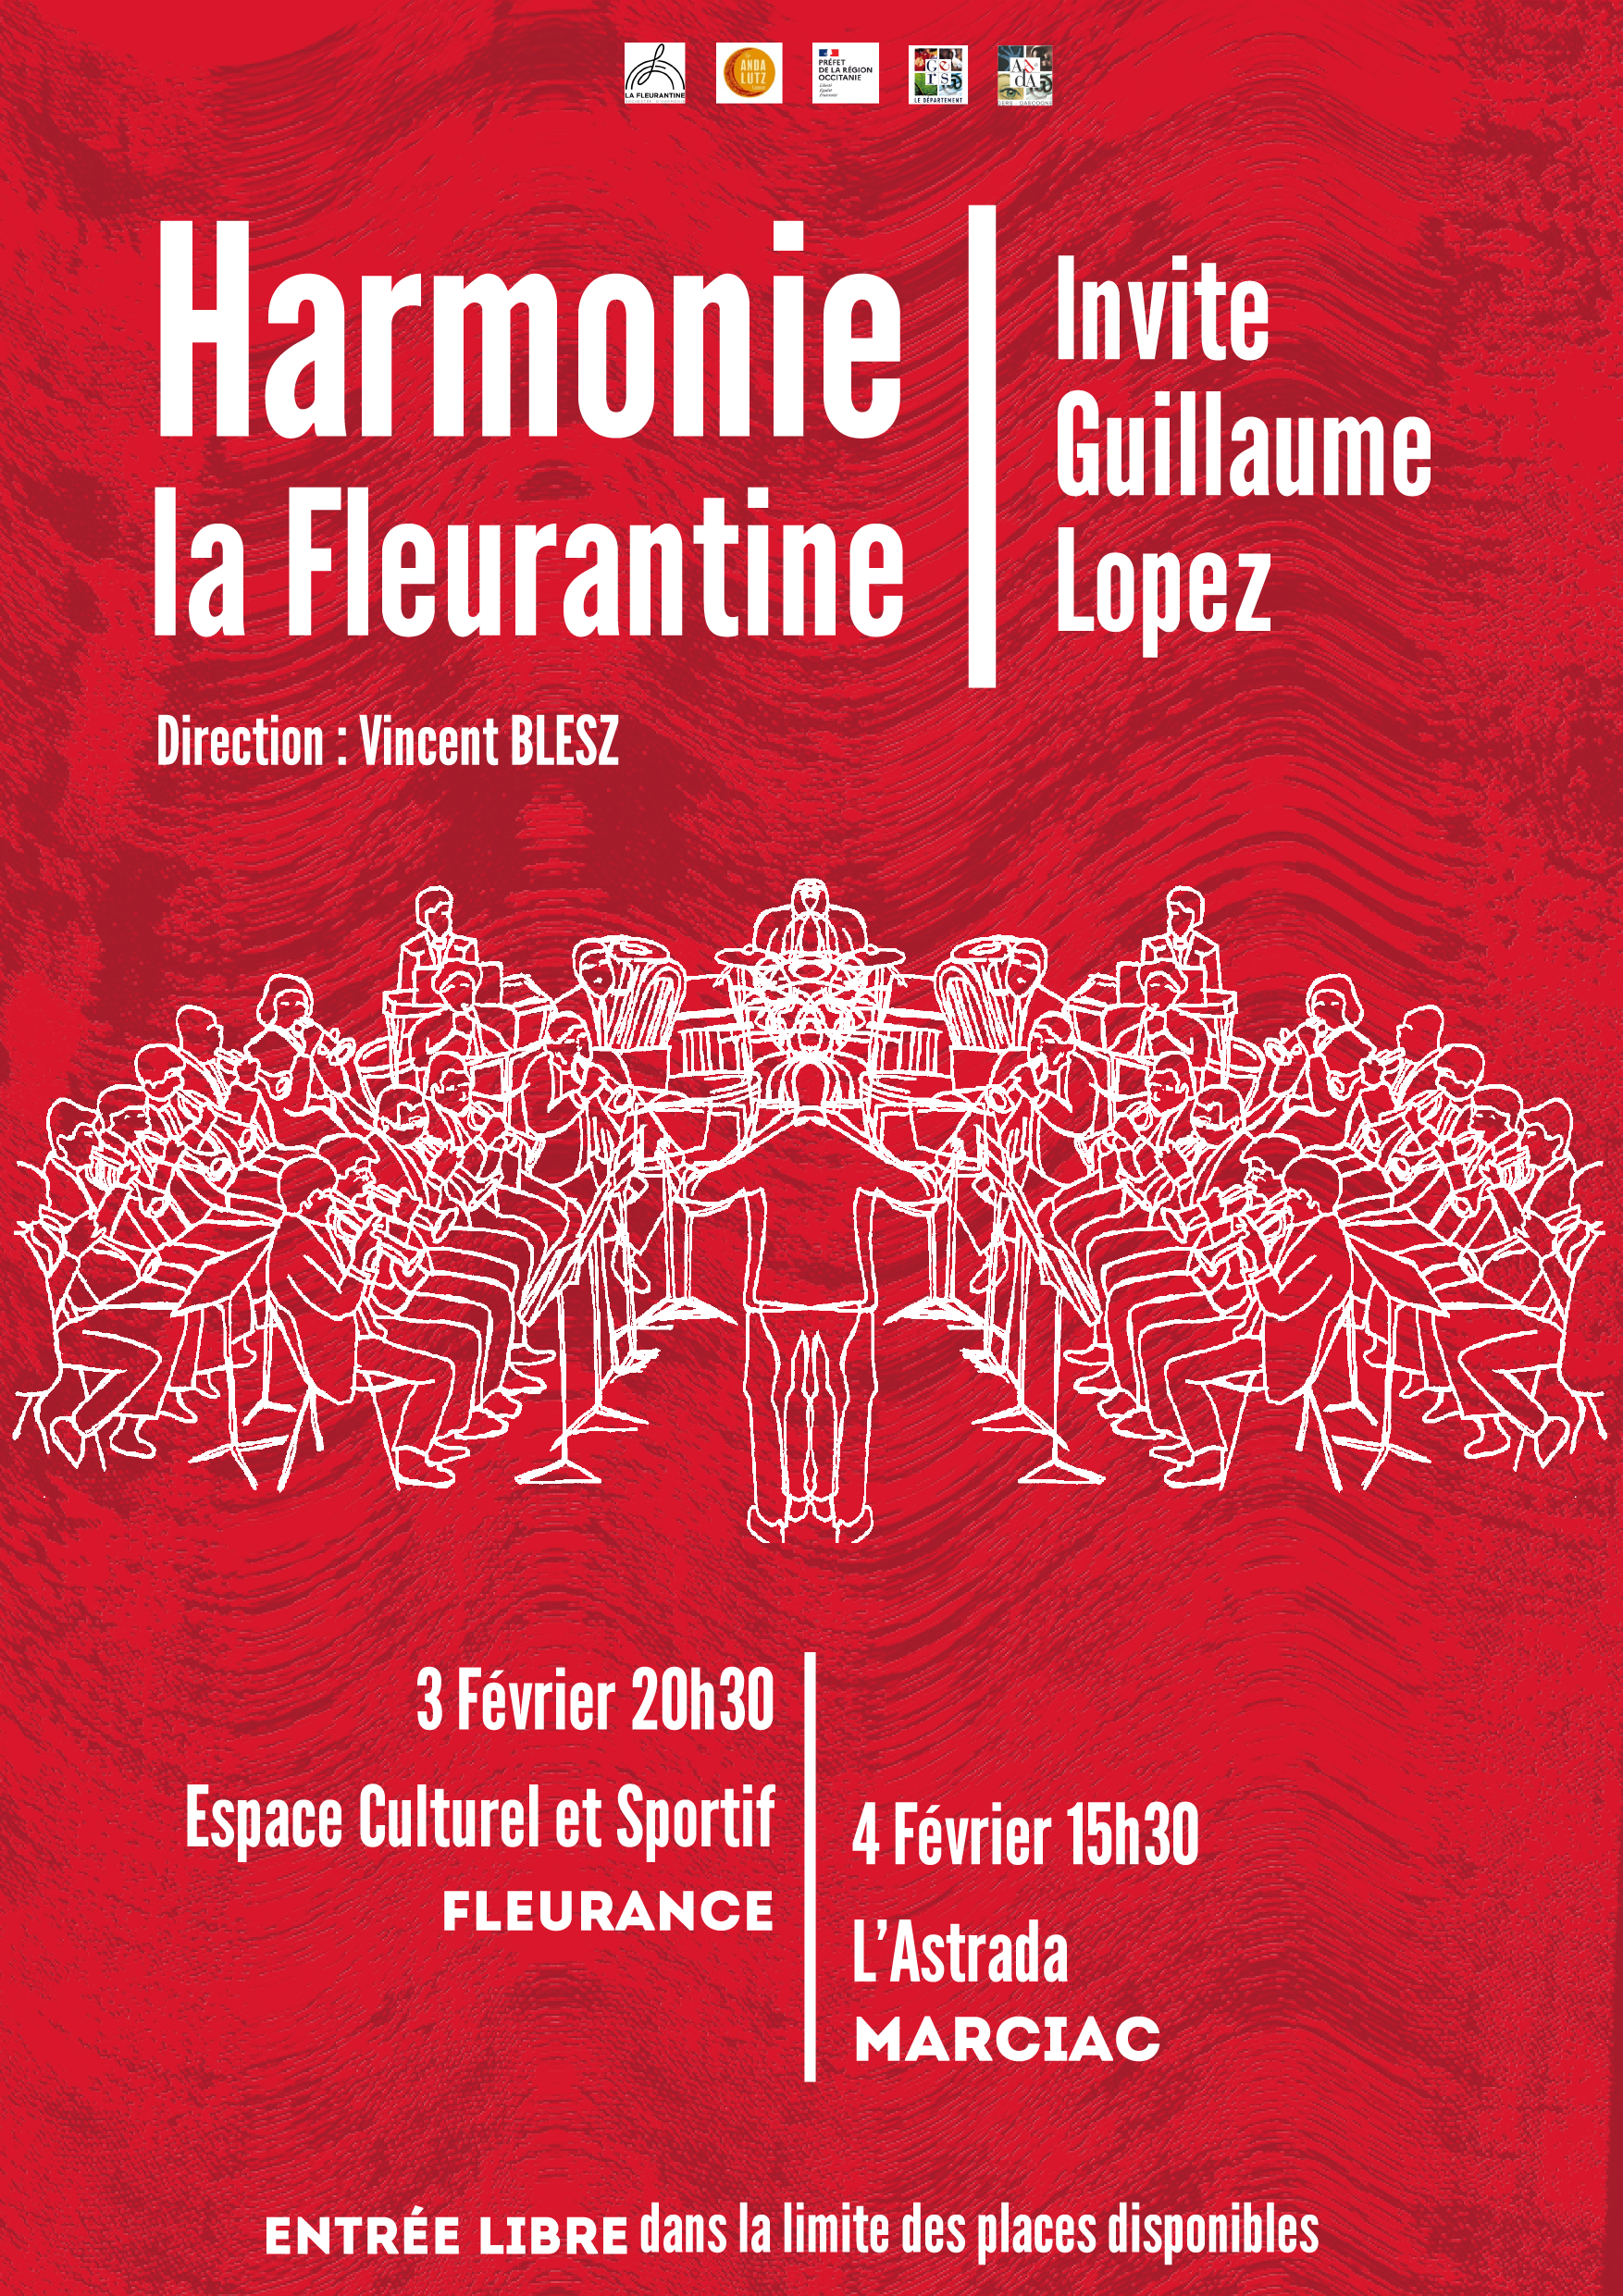 L’Harmonie La Fleurantine invite Guillaume Lopez